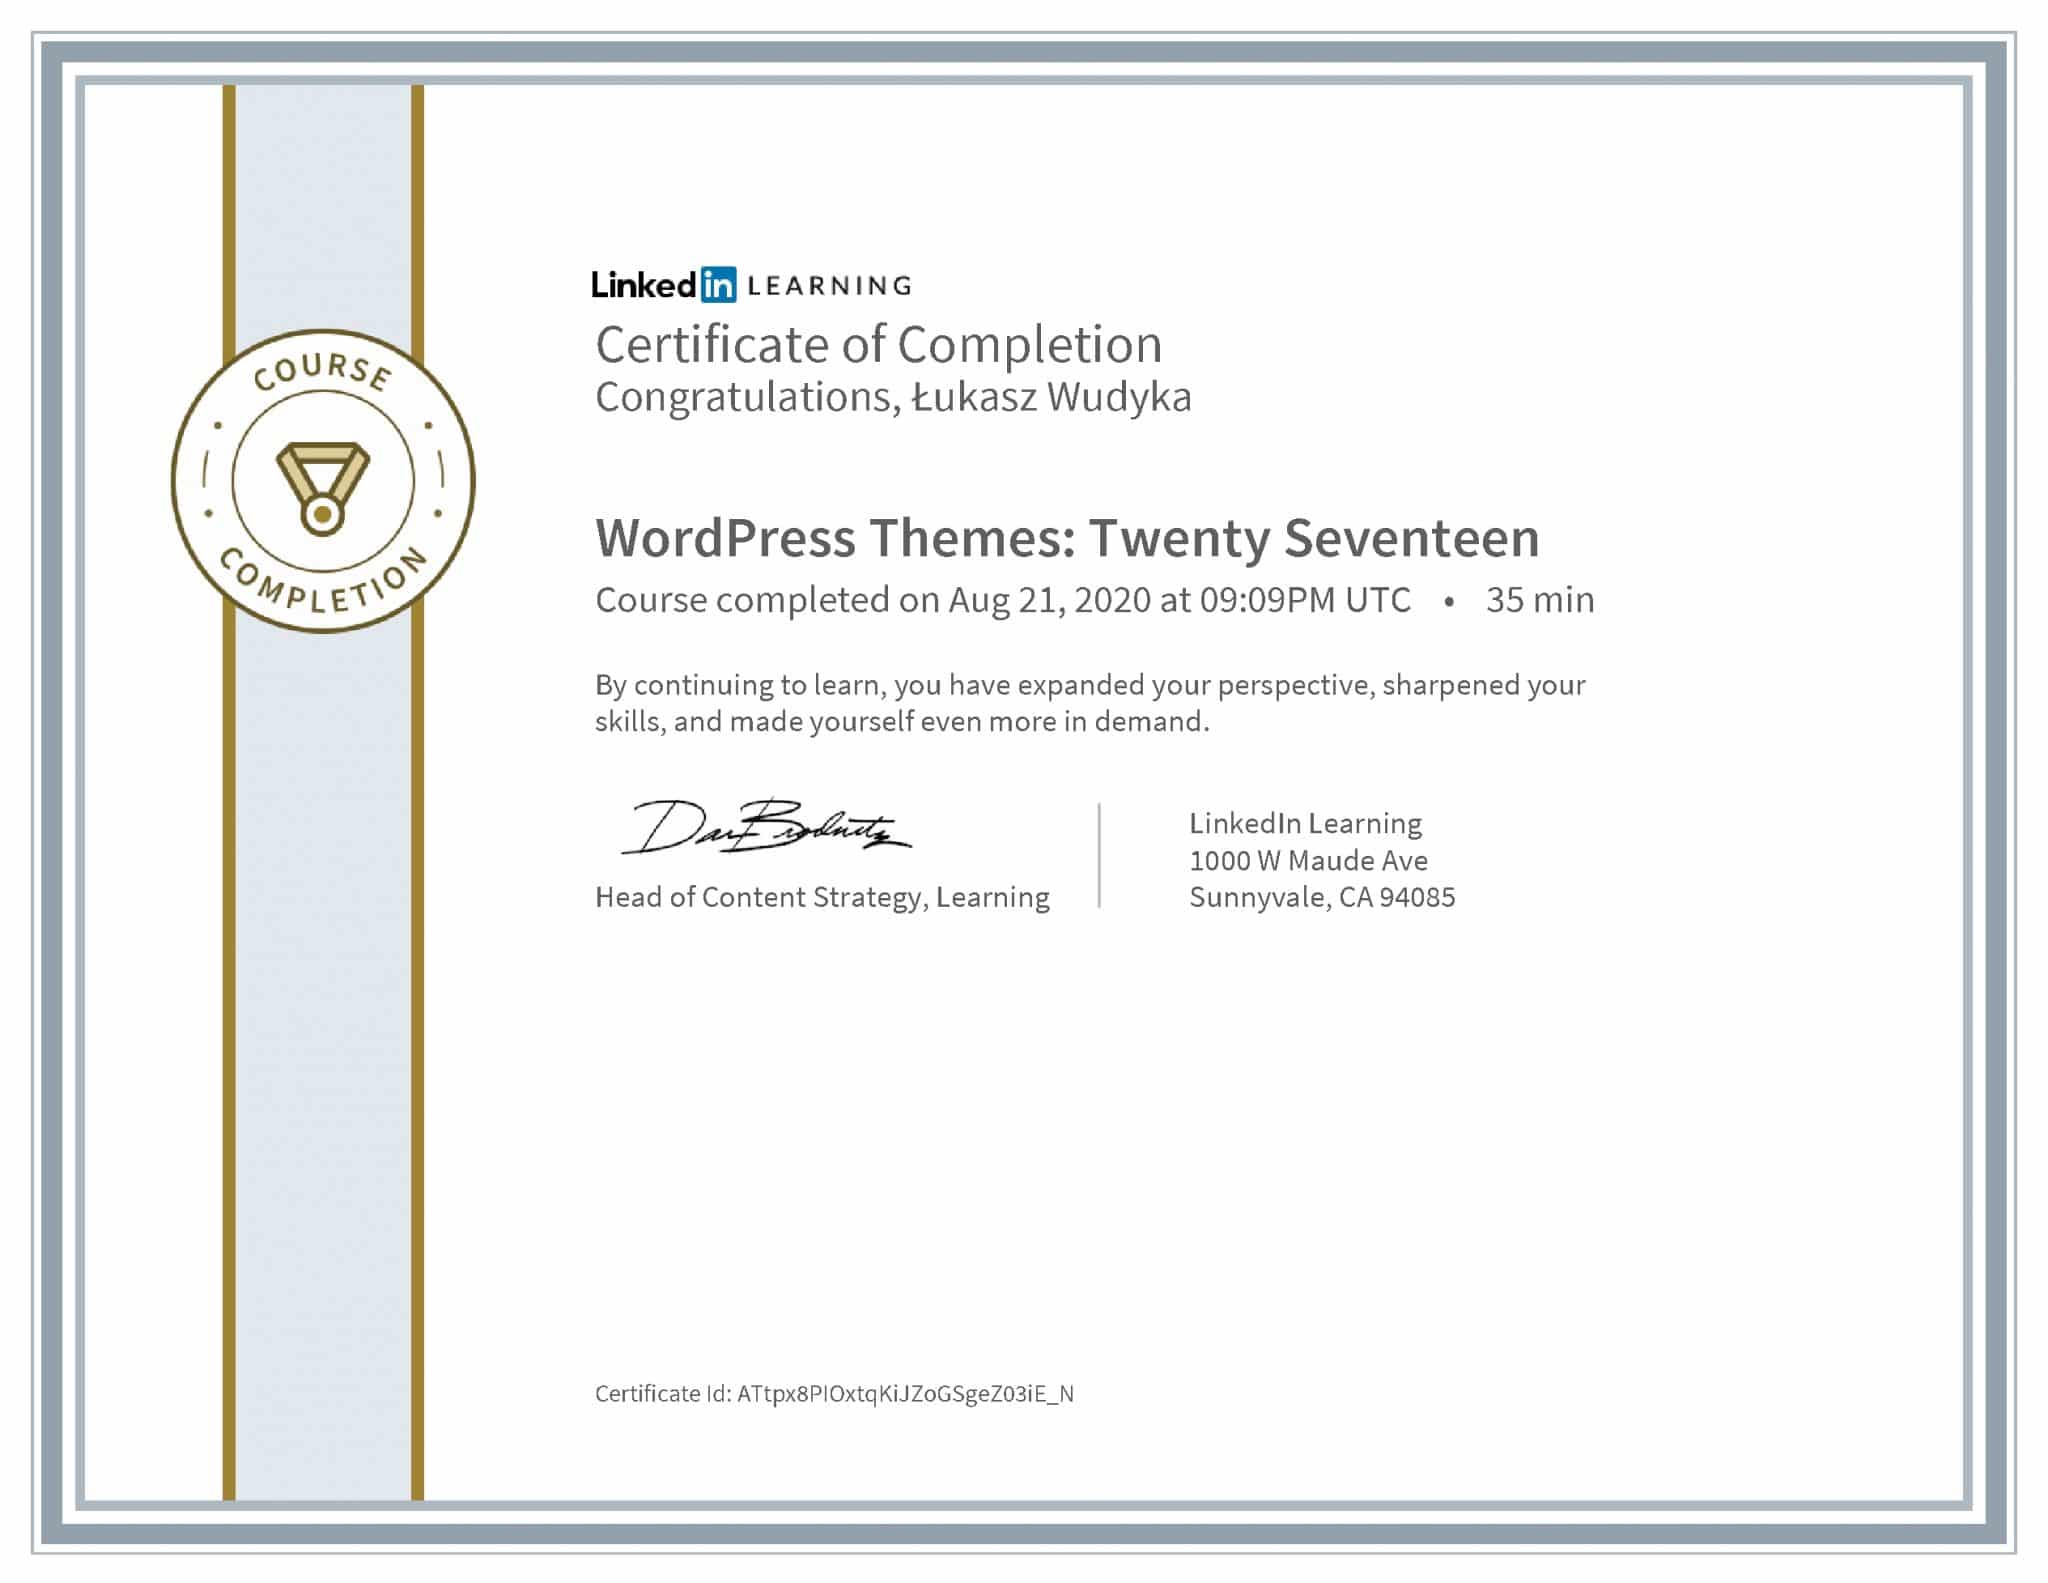 Łukasz Wudyka certyfikat LinkedIn WordPress Themes: Twenty Seventeen